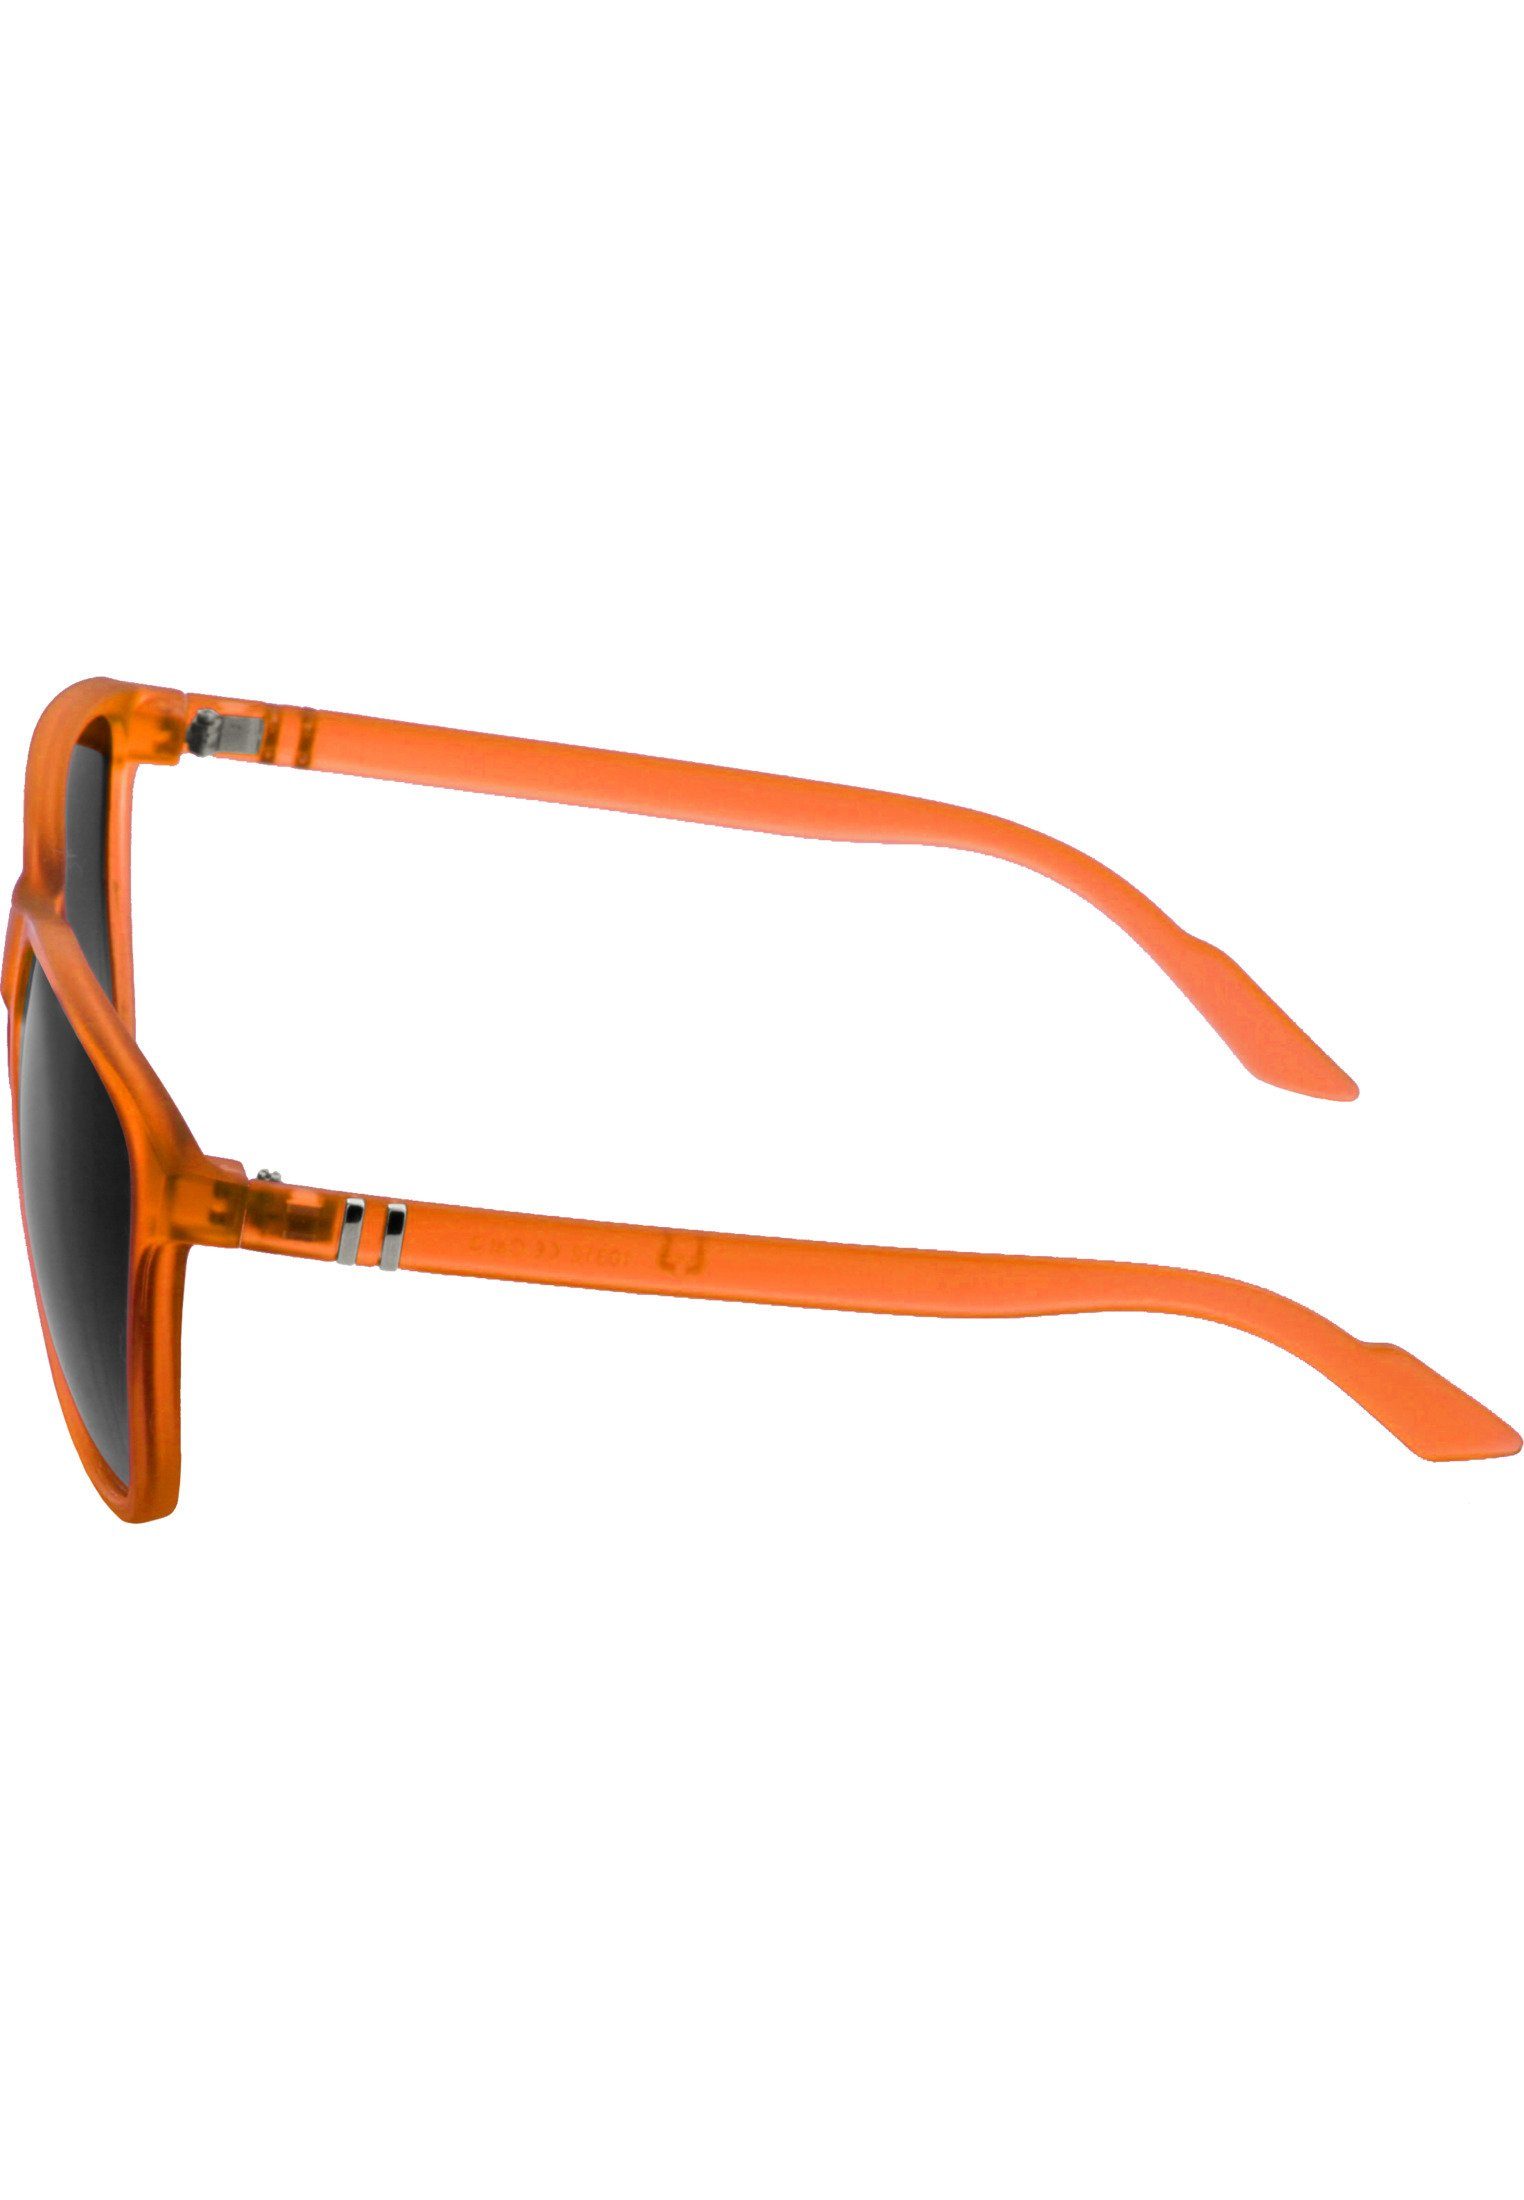 Sunglasses MSTRDS neonorange Sonnenbrille Chirwa Accessoires